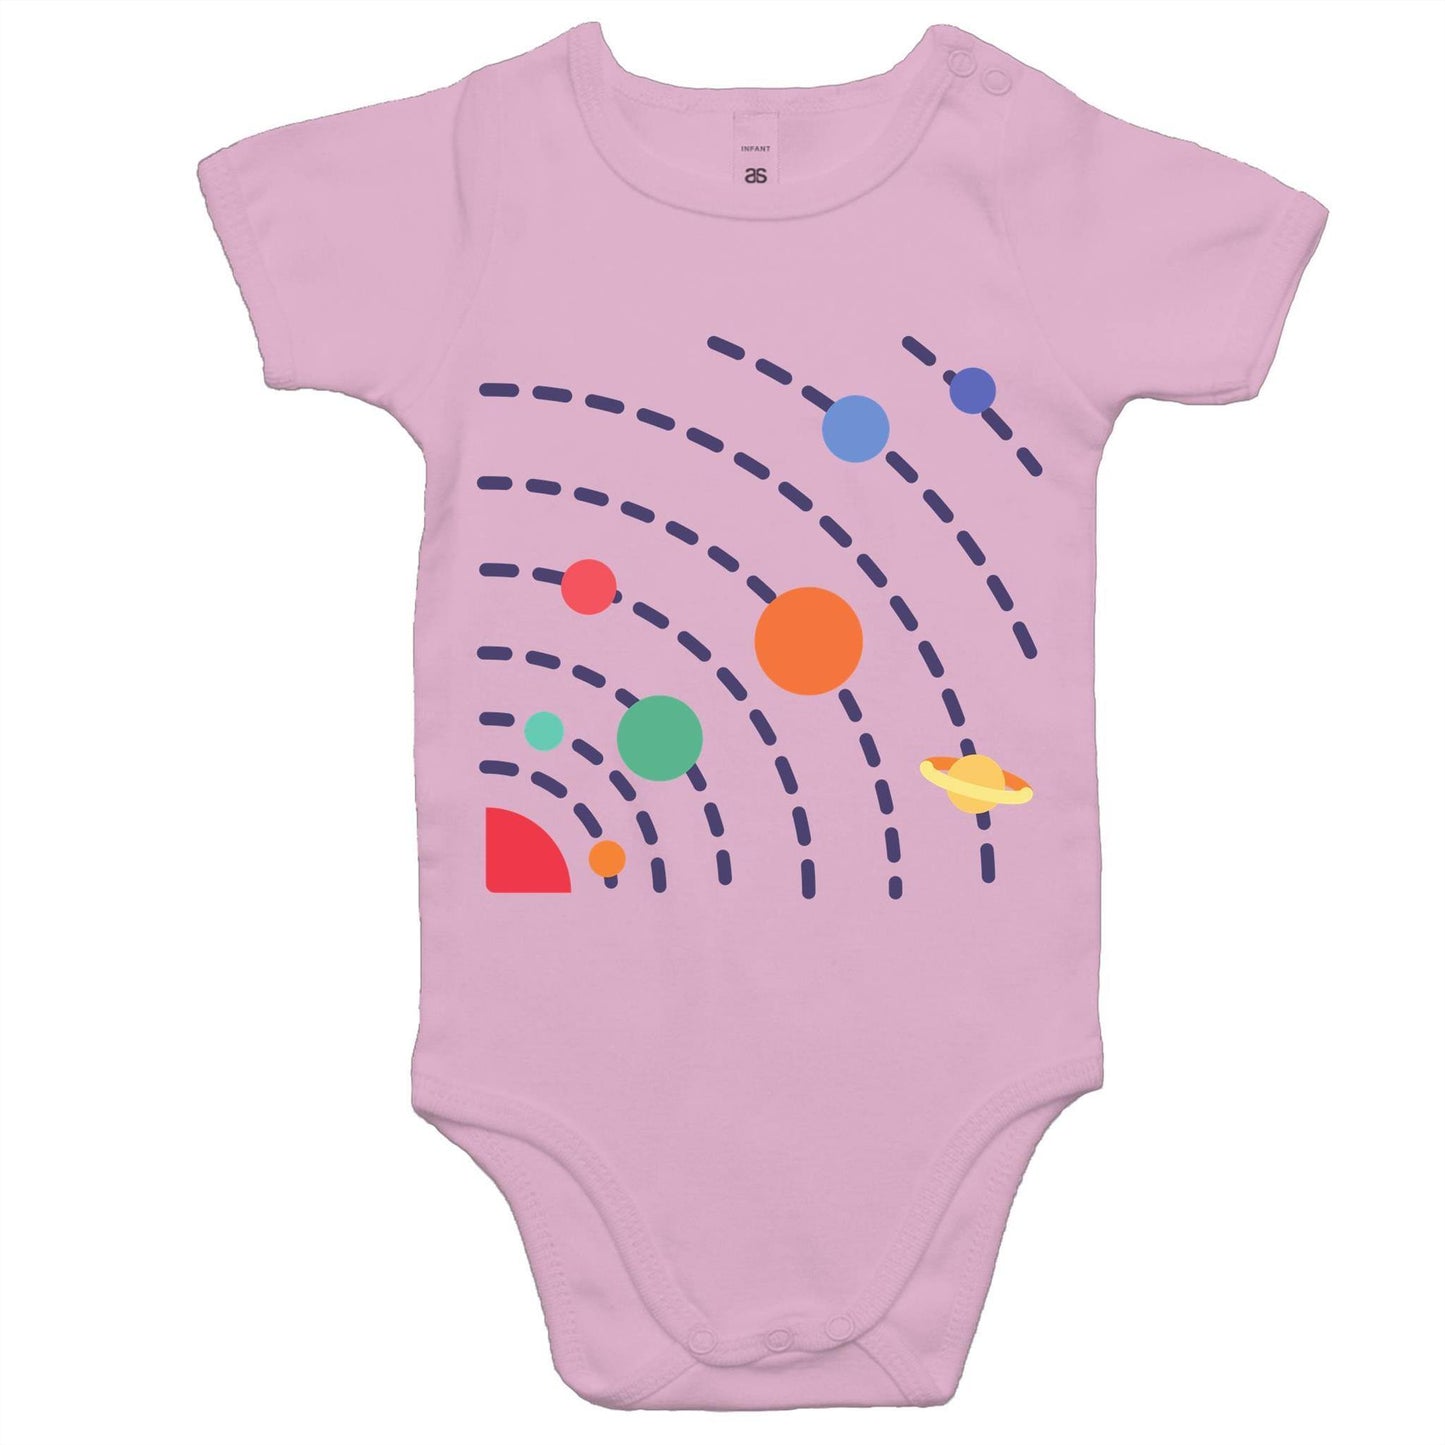 Solar System - Baby Bodysuit Pink Baby Bodysuit kids Science Space